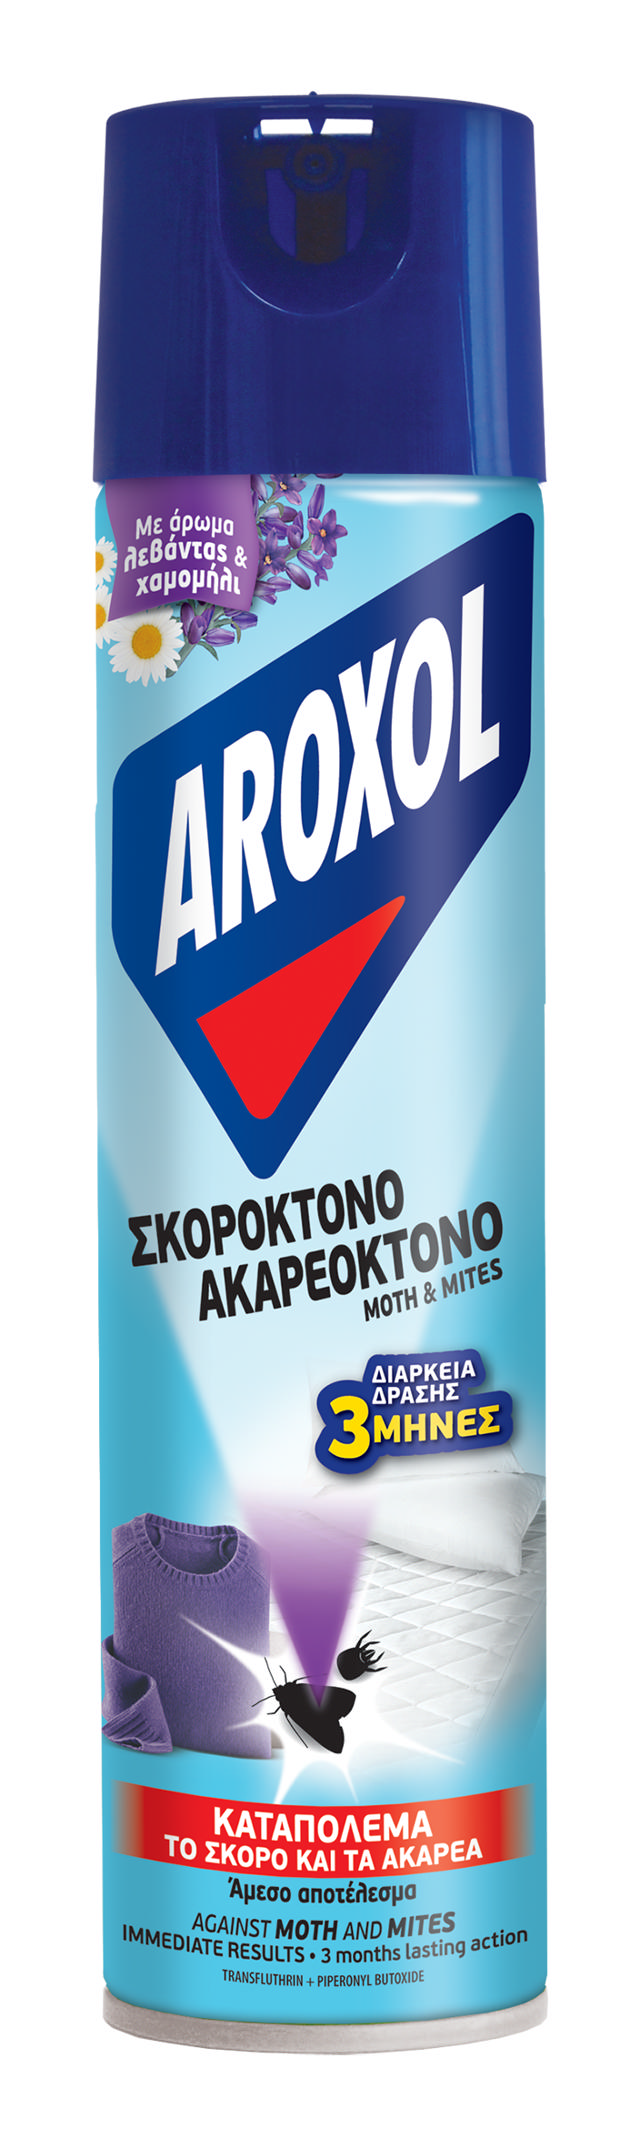 AROXOL ΣΚΟΡΟΚΤΟΝΟ&ΑΚΑΡΕΟΚΤΟΝΟ SPRAY 300ML